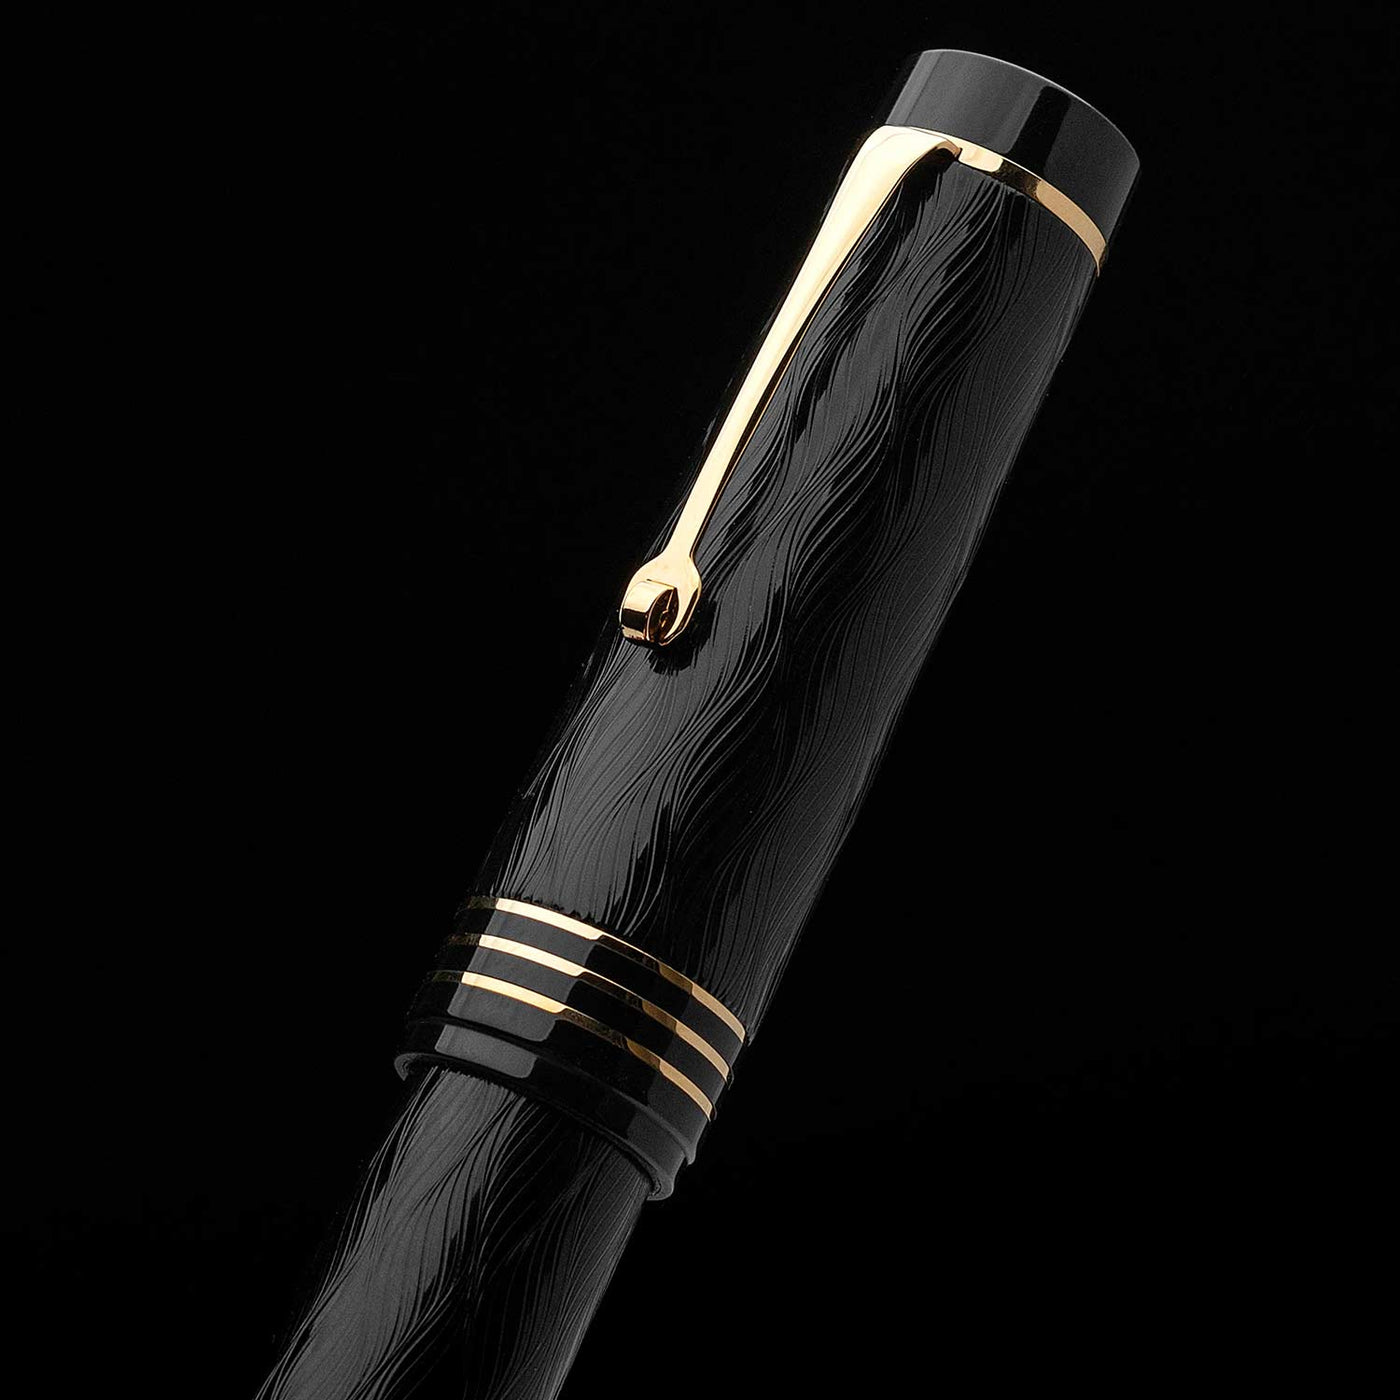 Leonardo MZ Grande Audace Art Nouveau No.8 Fountain Pen - Intense Black GT (Limited Edition) 6